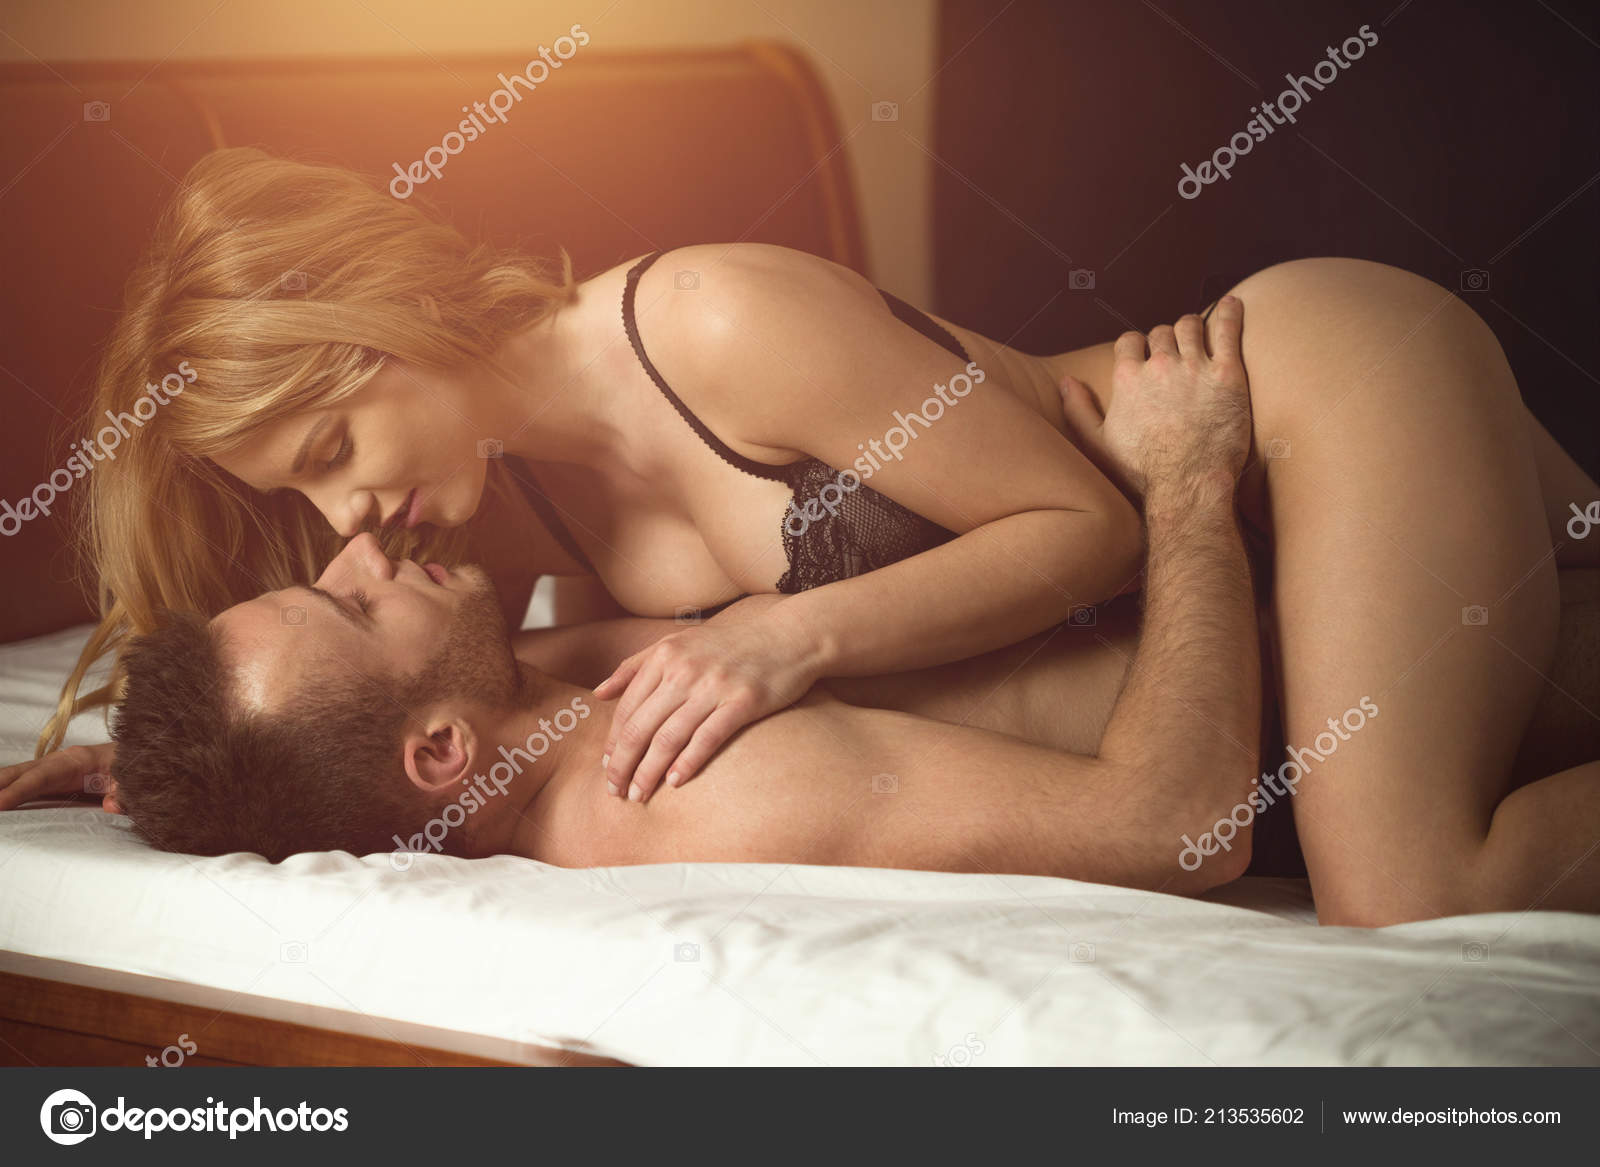 Sex intimate Loving Couple